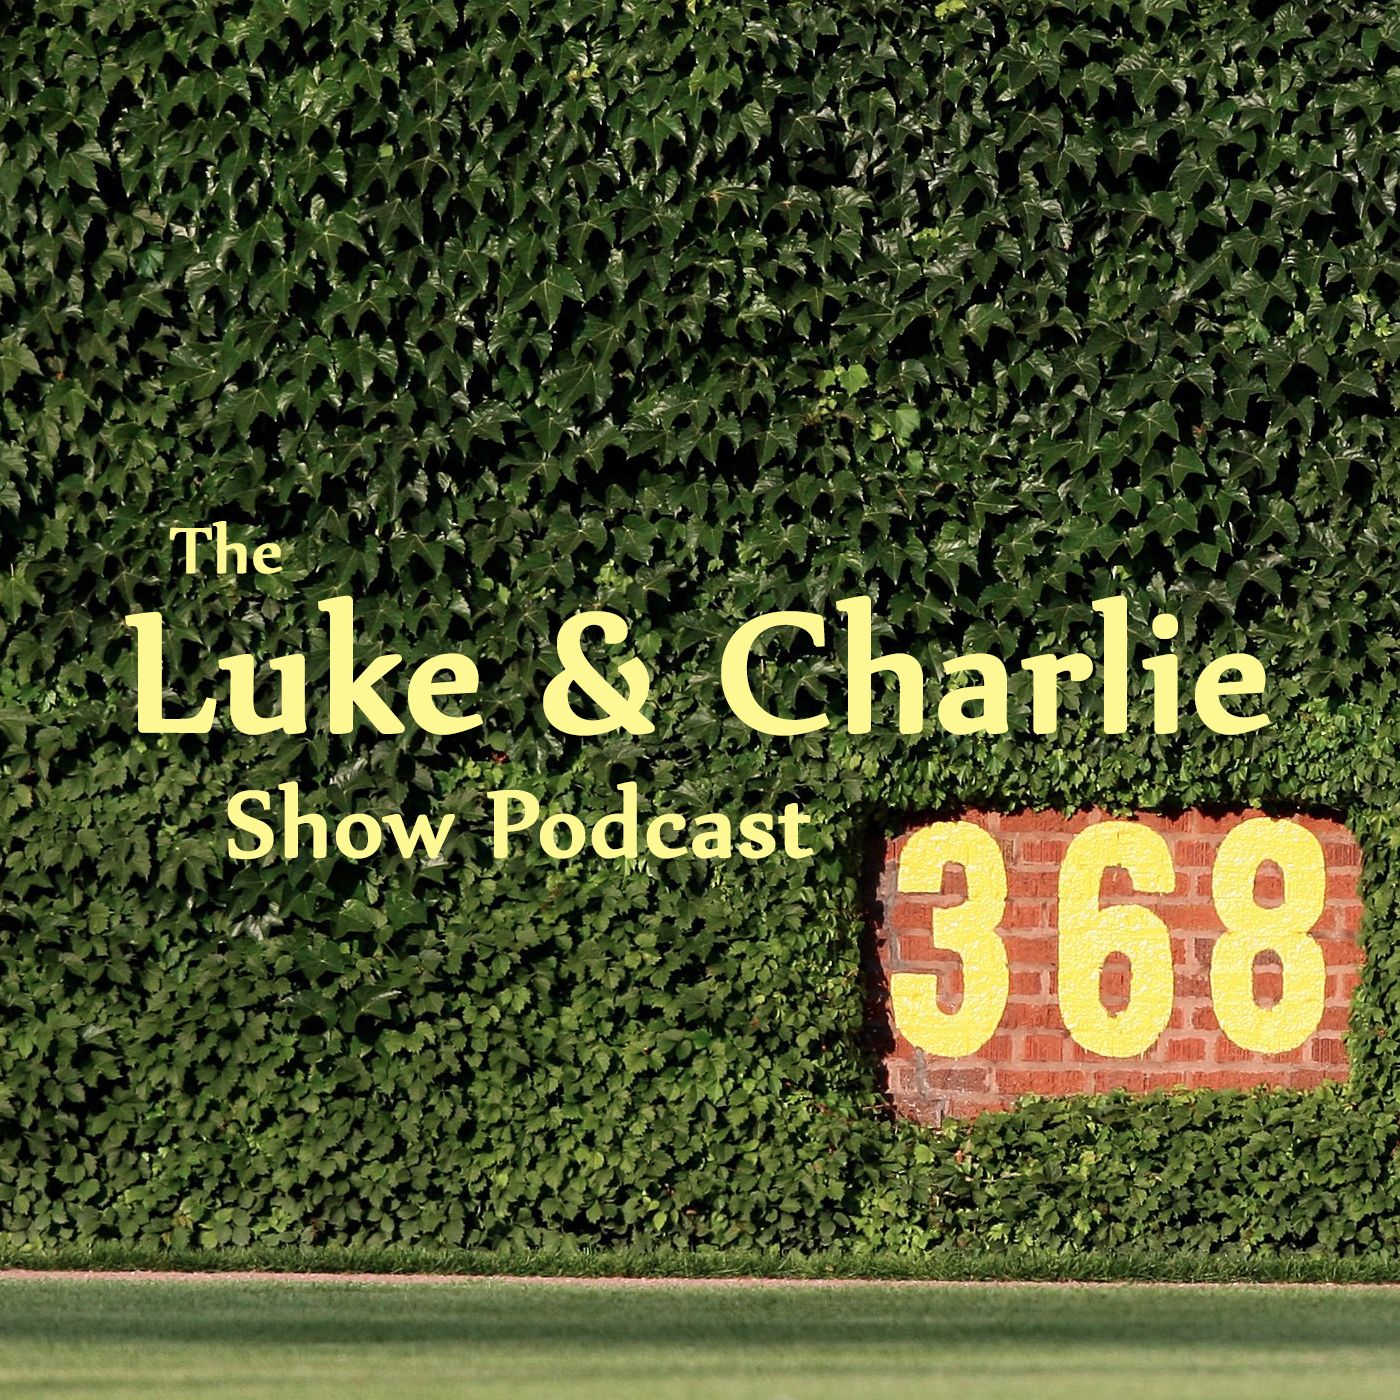 The Luke & Charlie Show Podcast